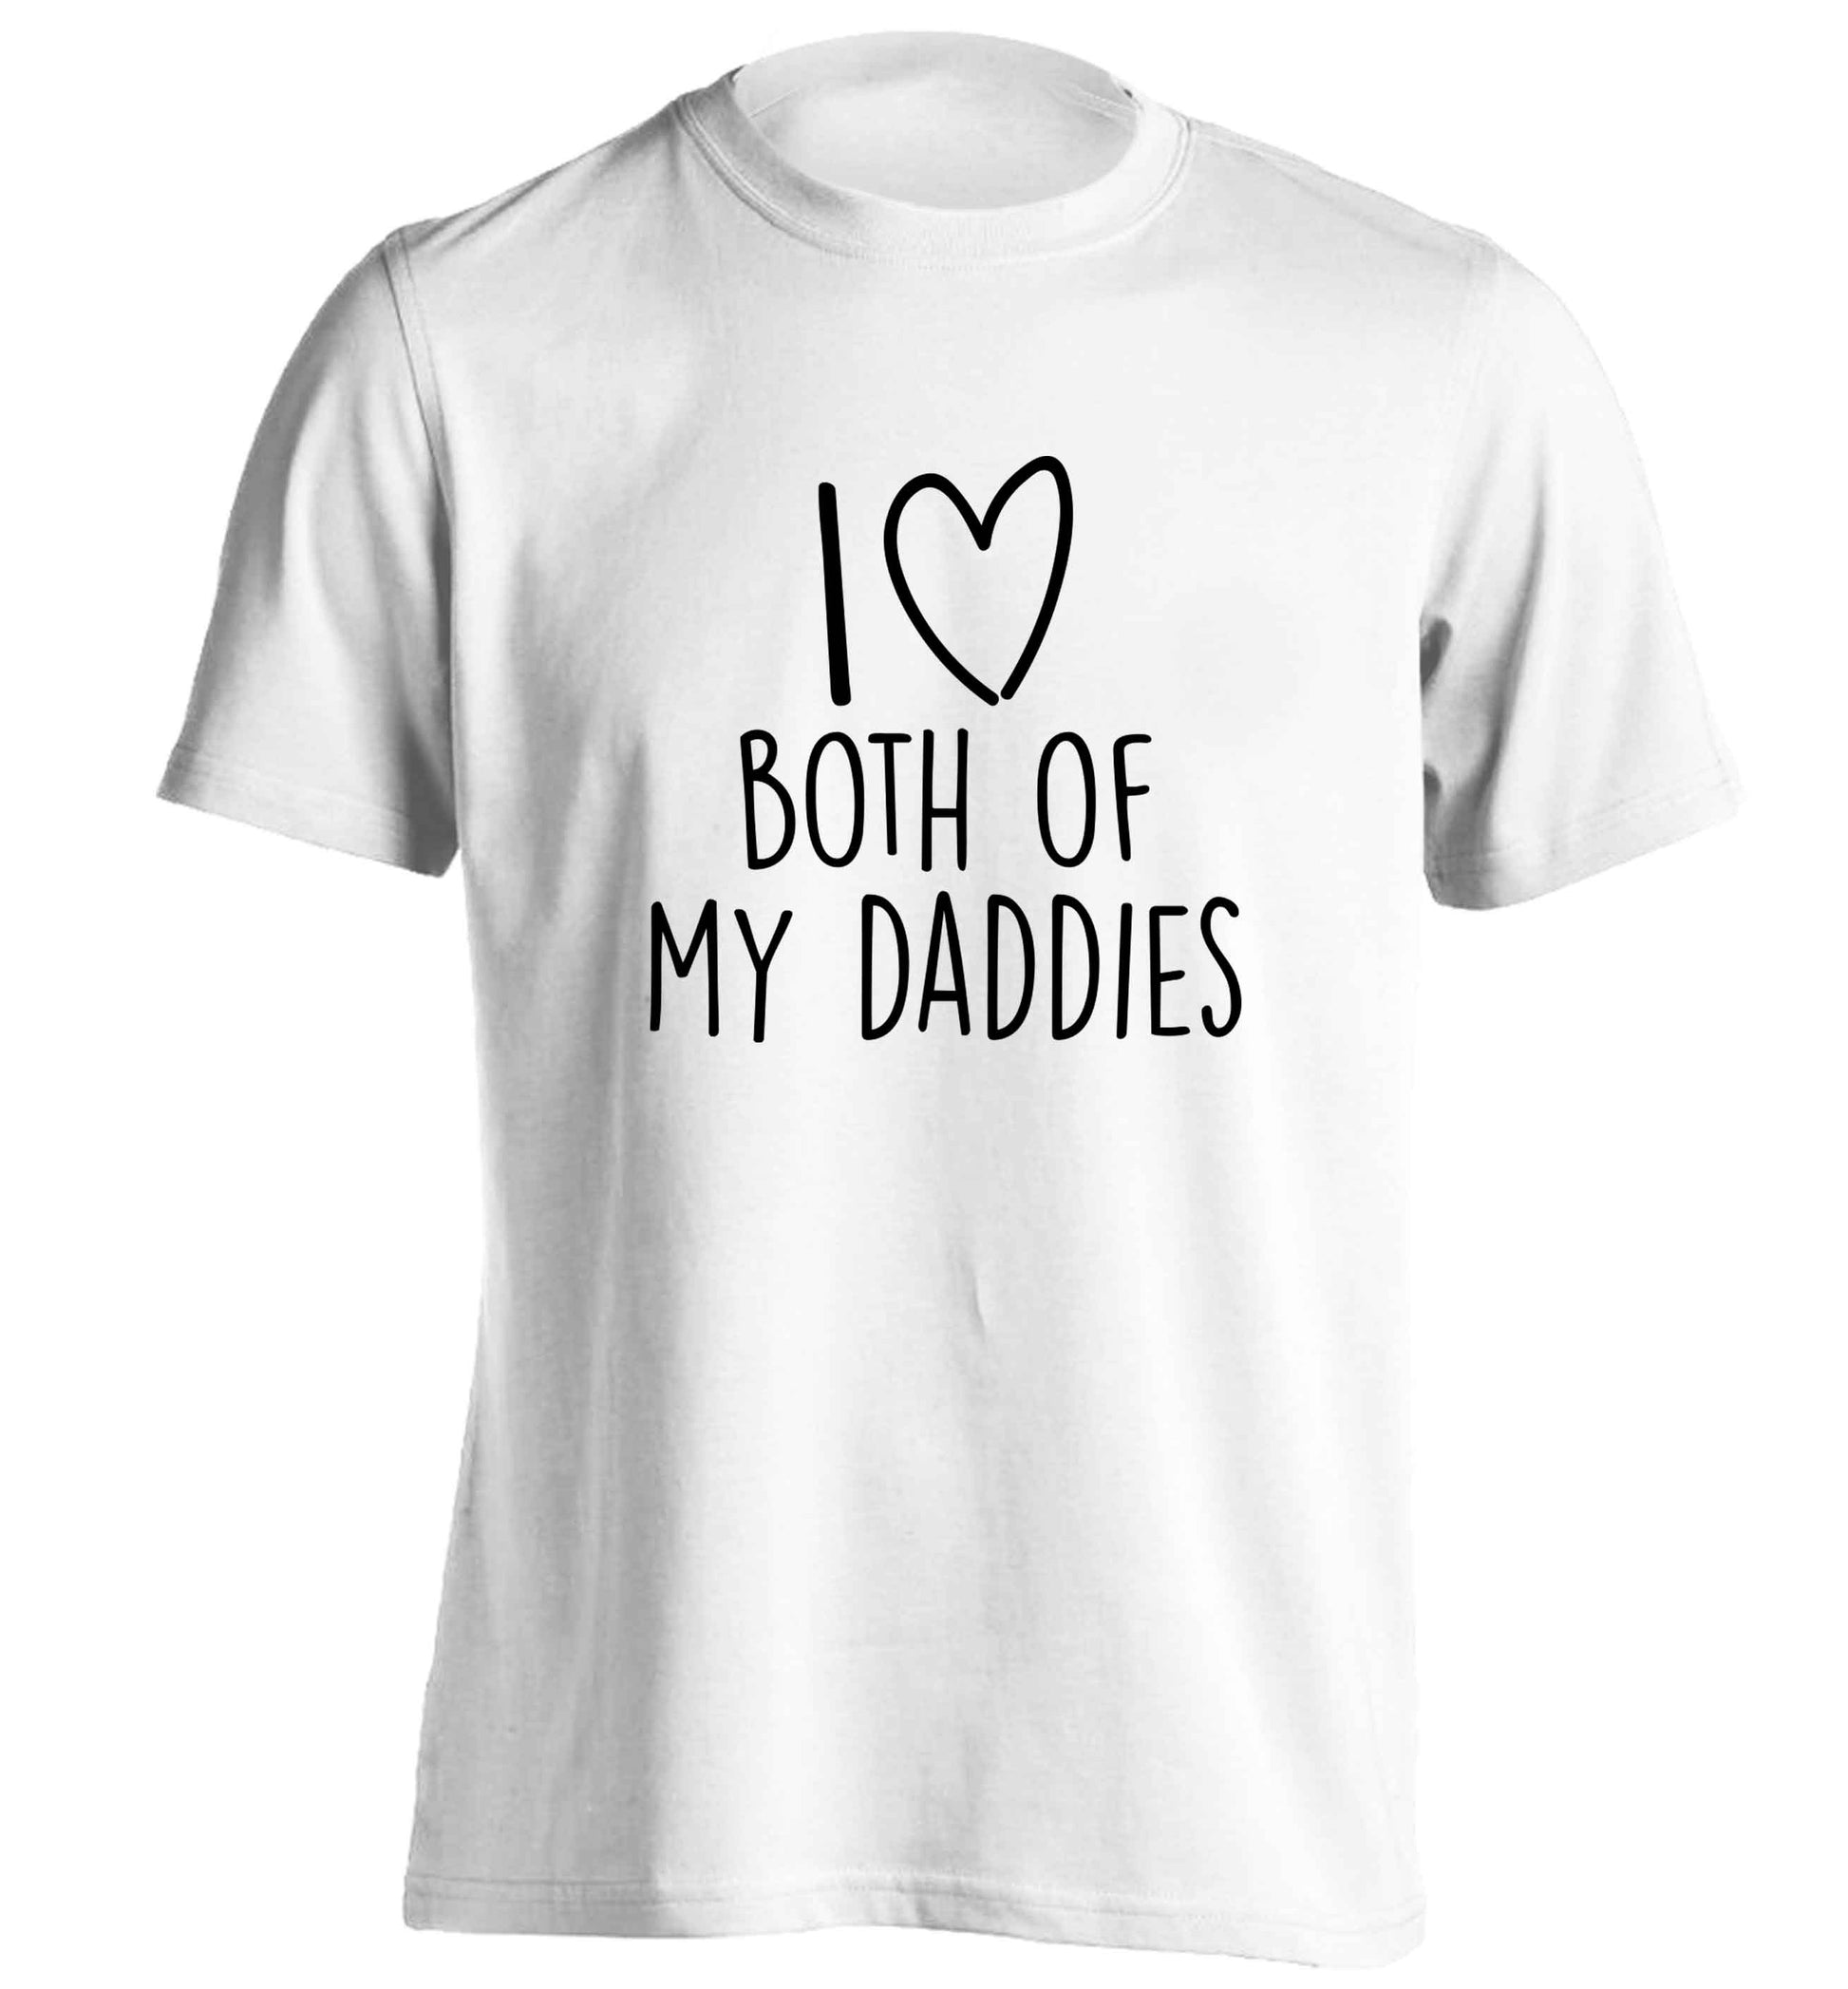 I love both of my daddies adults unisex white Tshirt 2XL